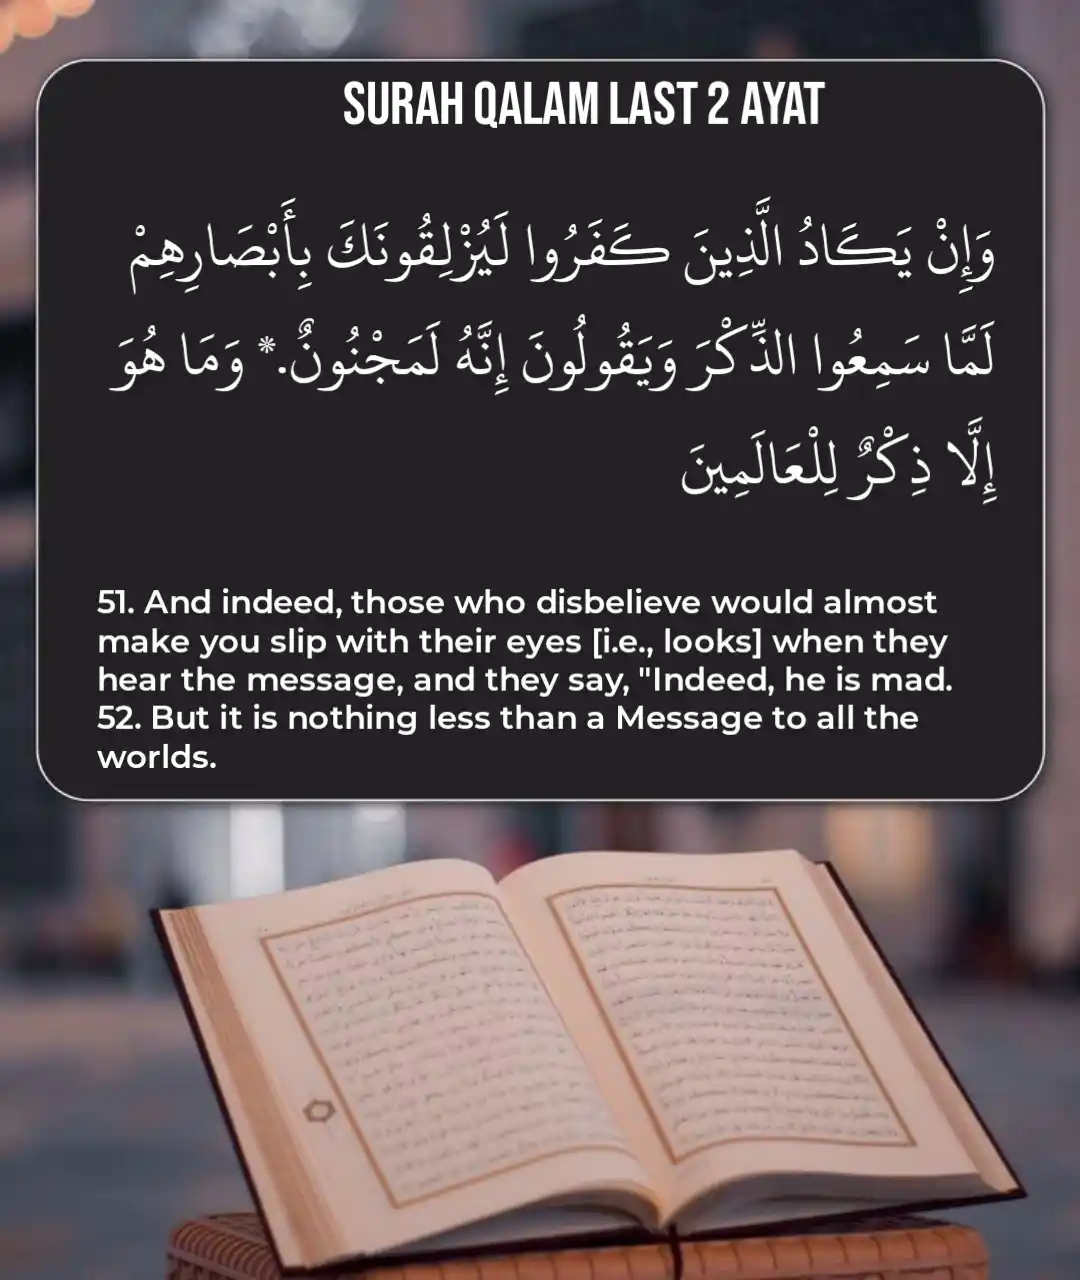 Surah Qalam Last 2 Ayat